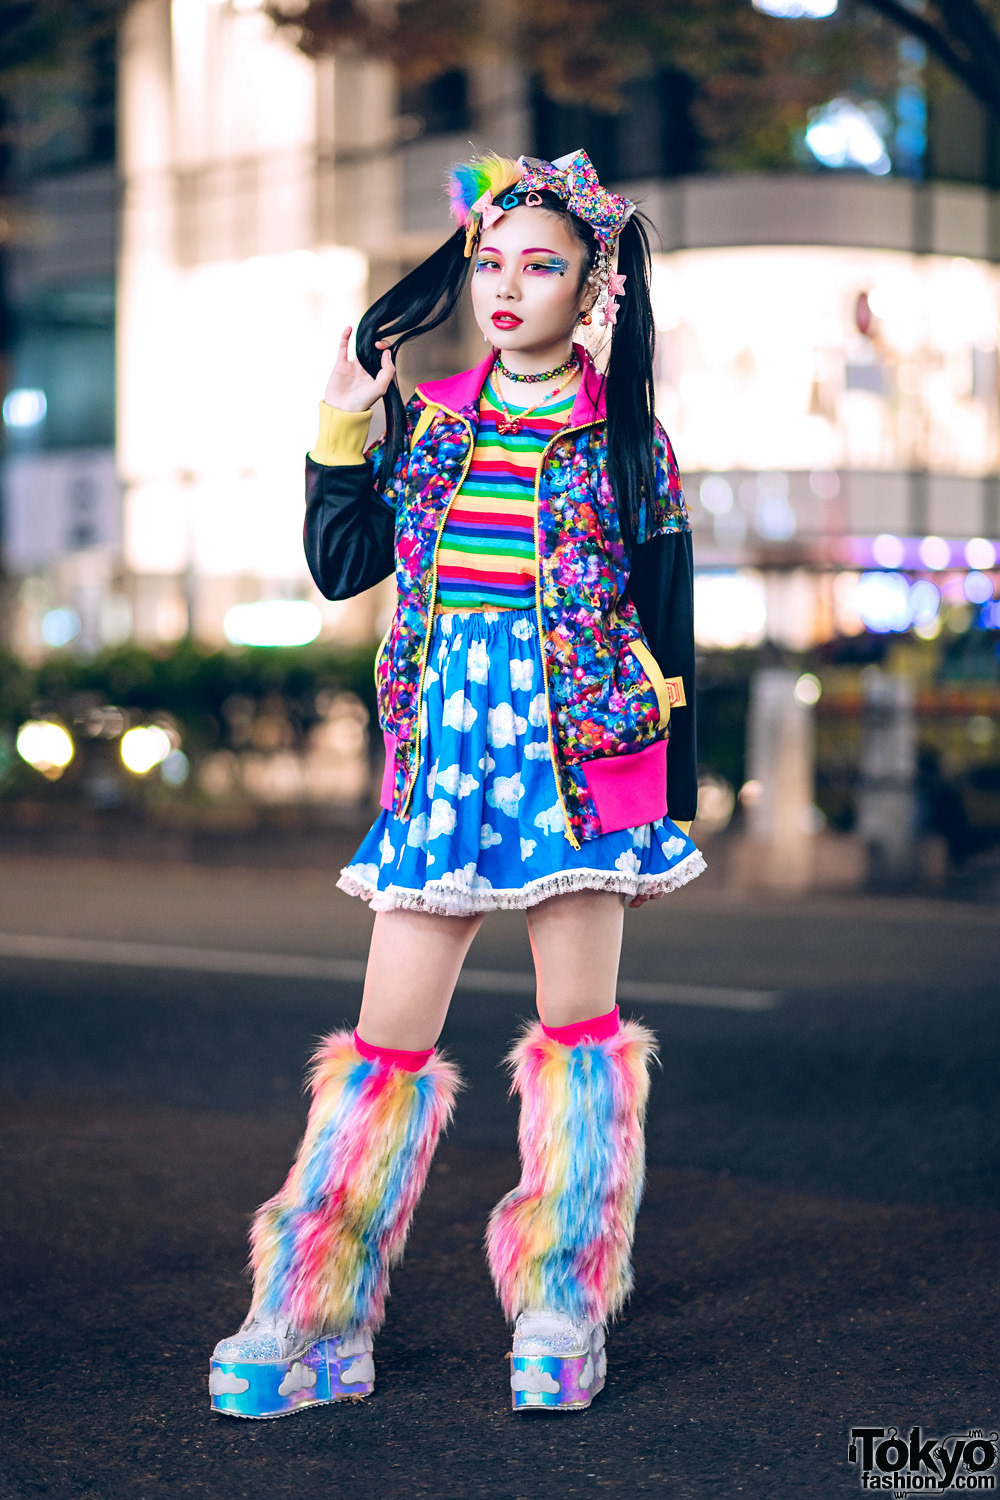 tokyo-fashion:  Japanese art school student Chami on the street in Harajuku wearing